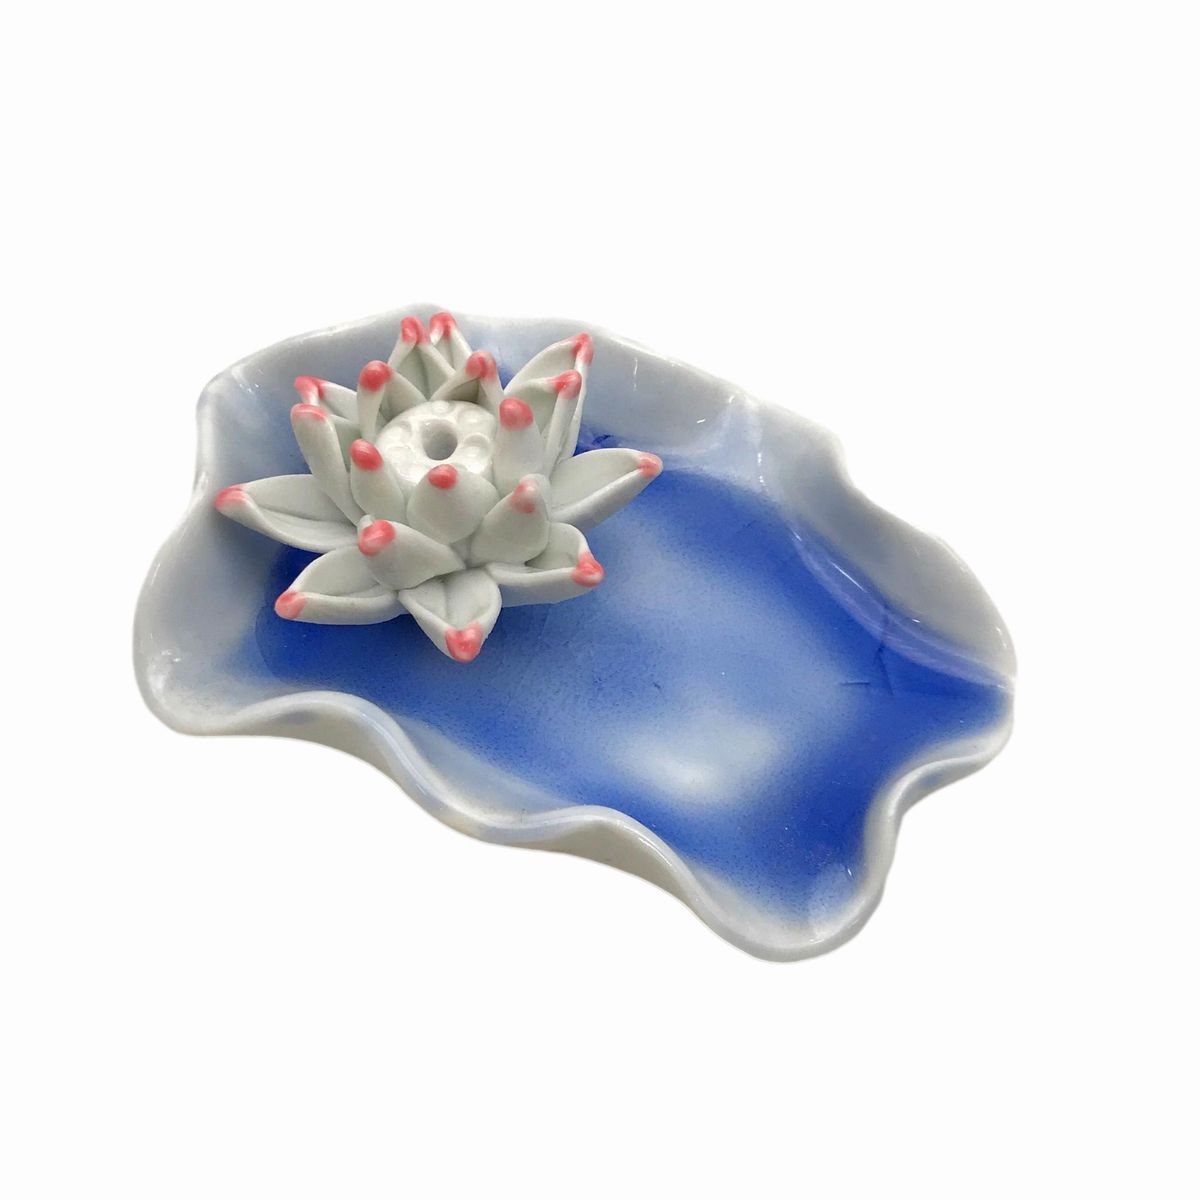  censer lotus. flower Japanese style ceramics wave type plate interior ( blue color )